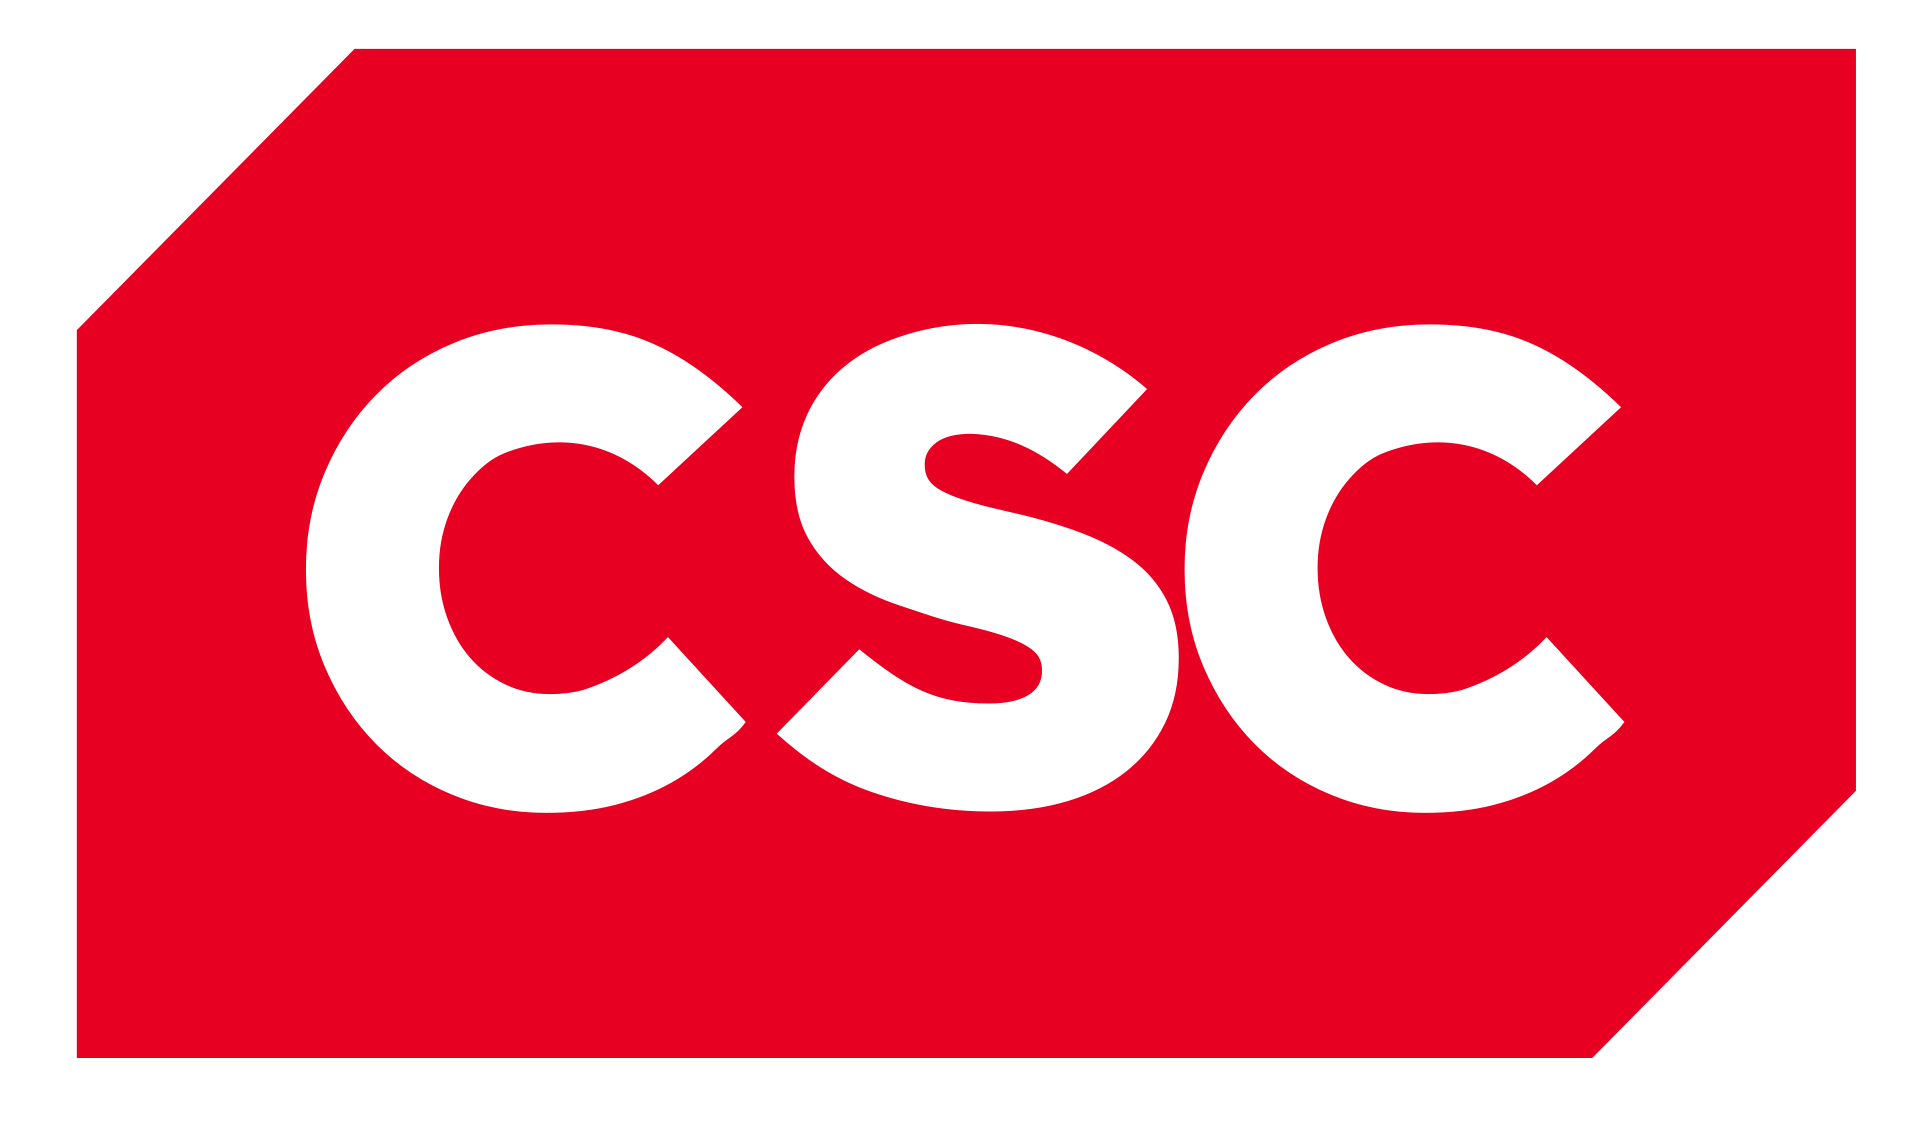 Computer Sciences Corporation Logo PNG Image